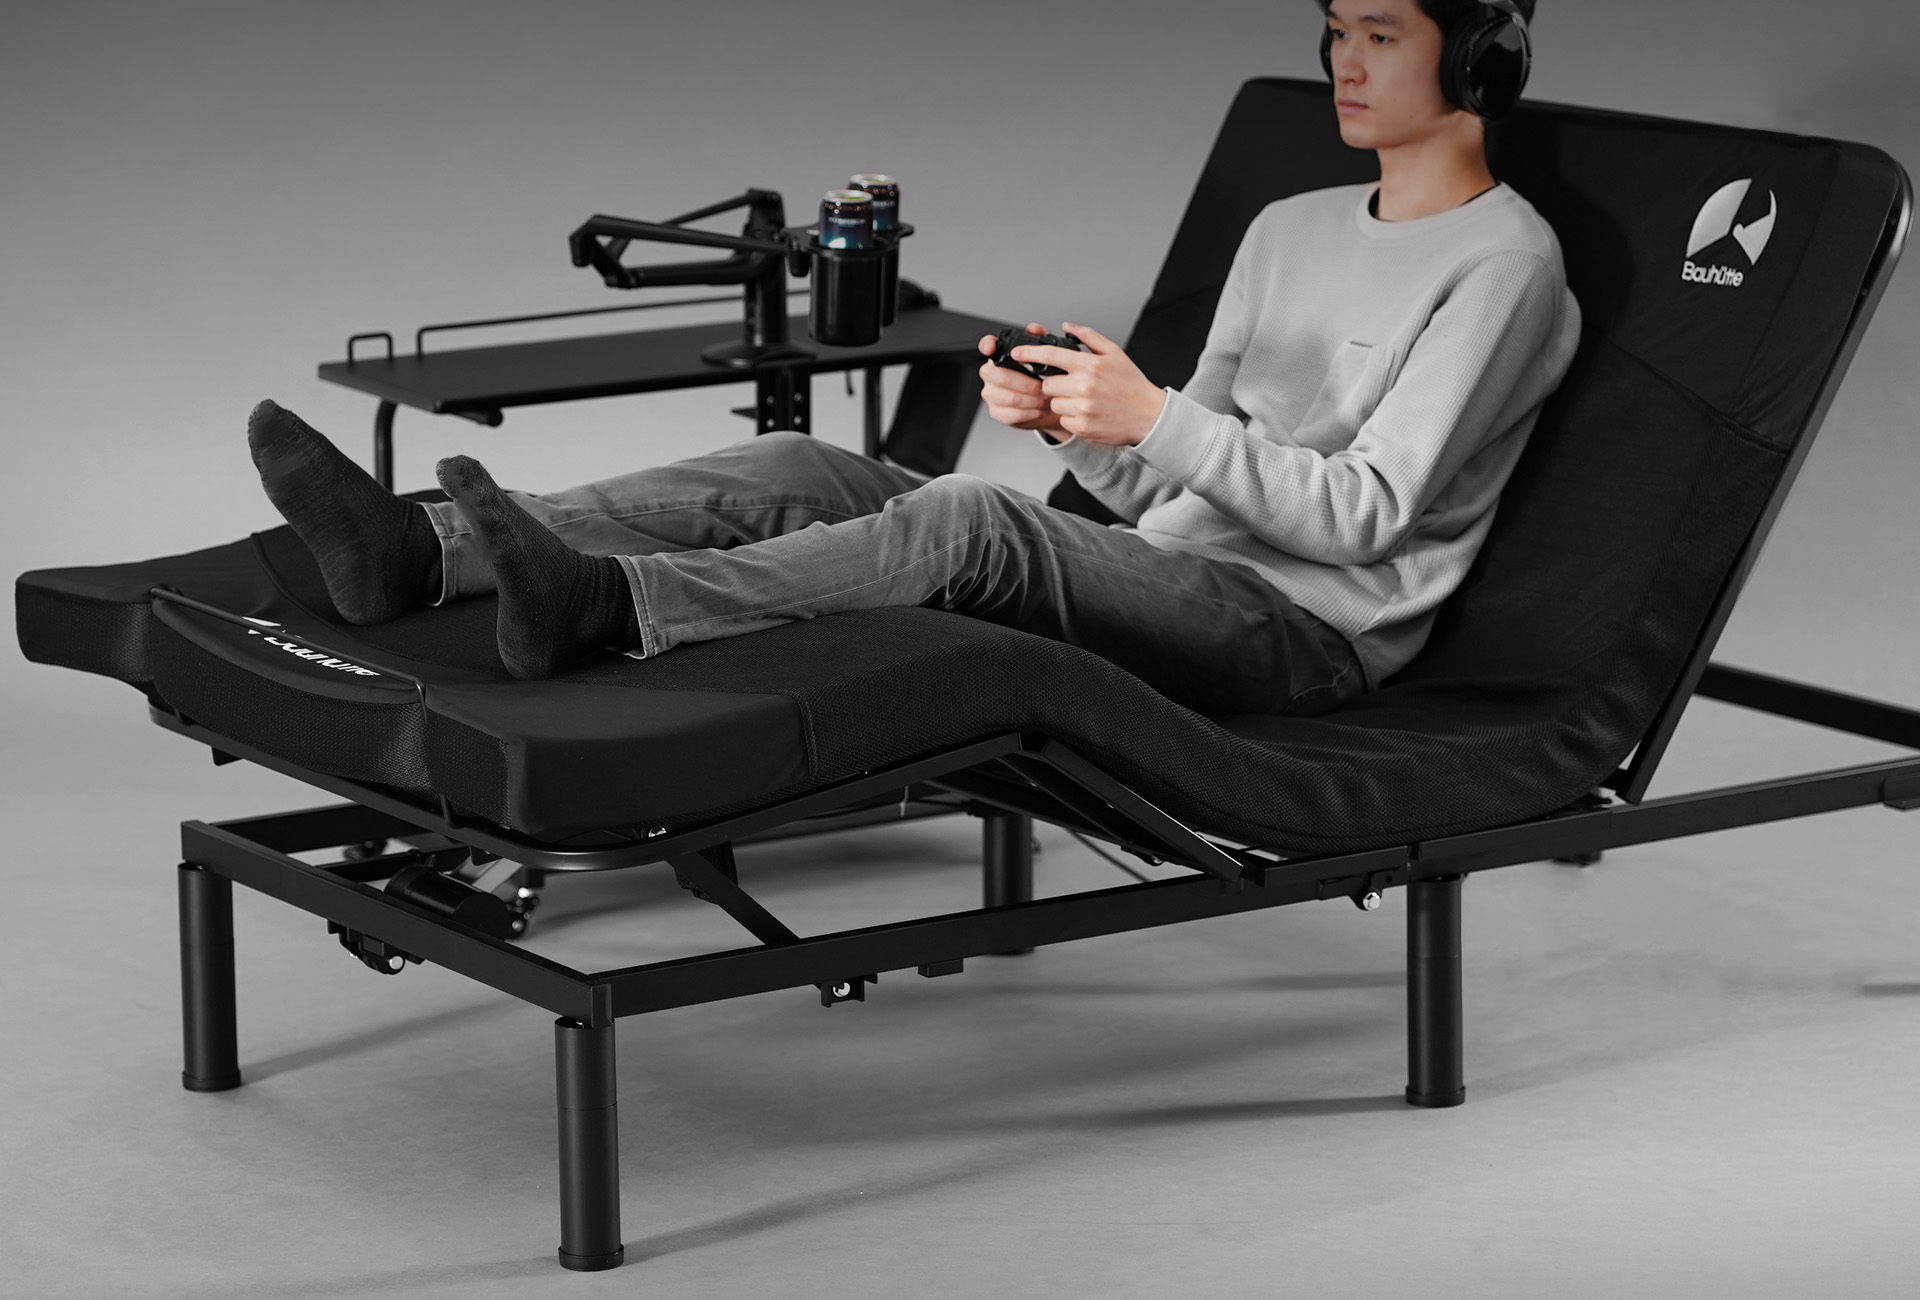 Bauhutte new transforming gaming chair.